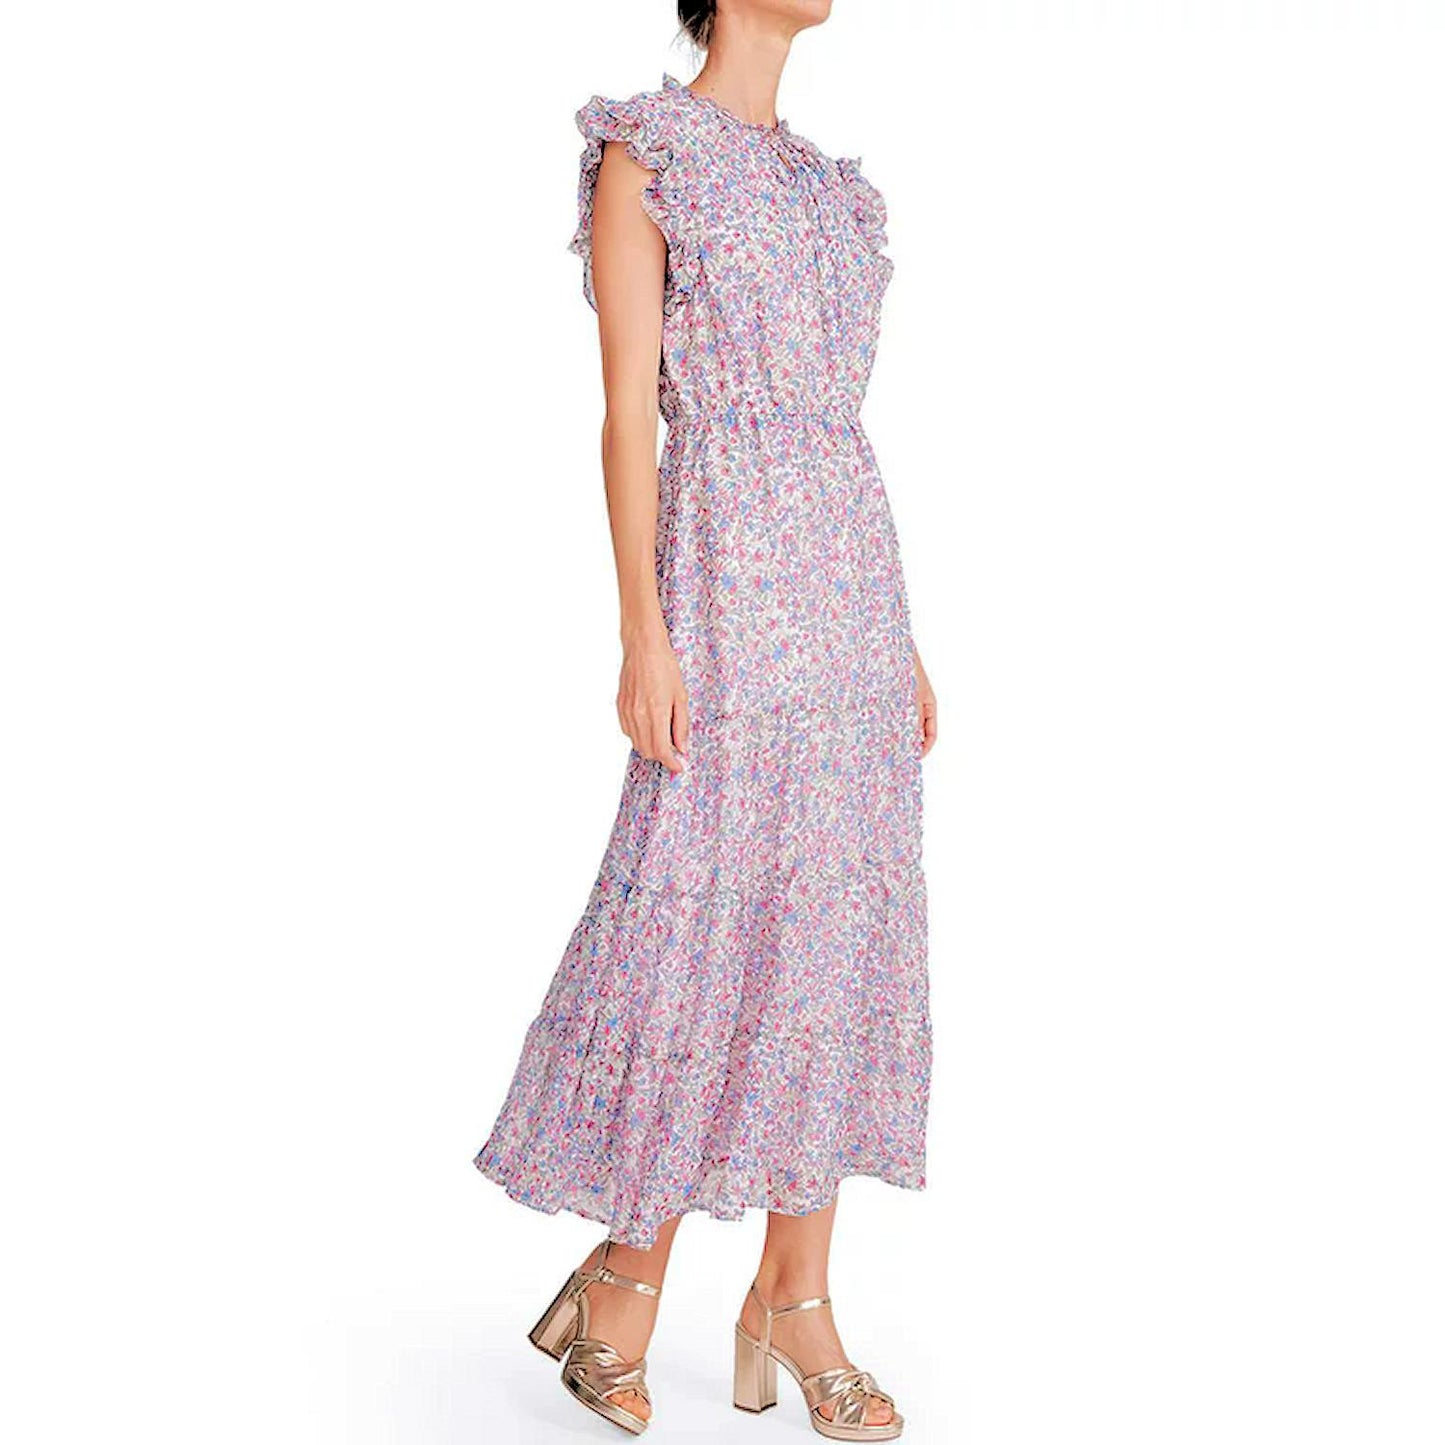 BB Dakota by Steve Madden Womens Ditsy Floral Sleeveless Printed Chiffon Dress